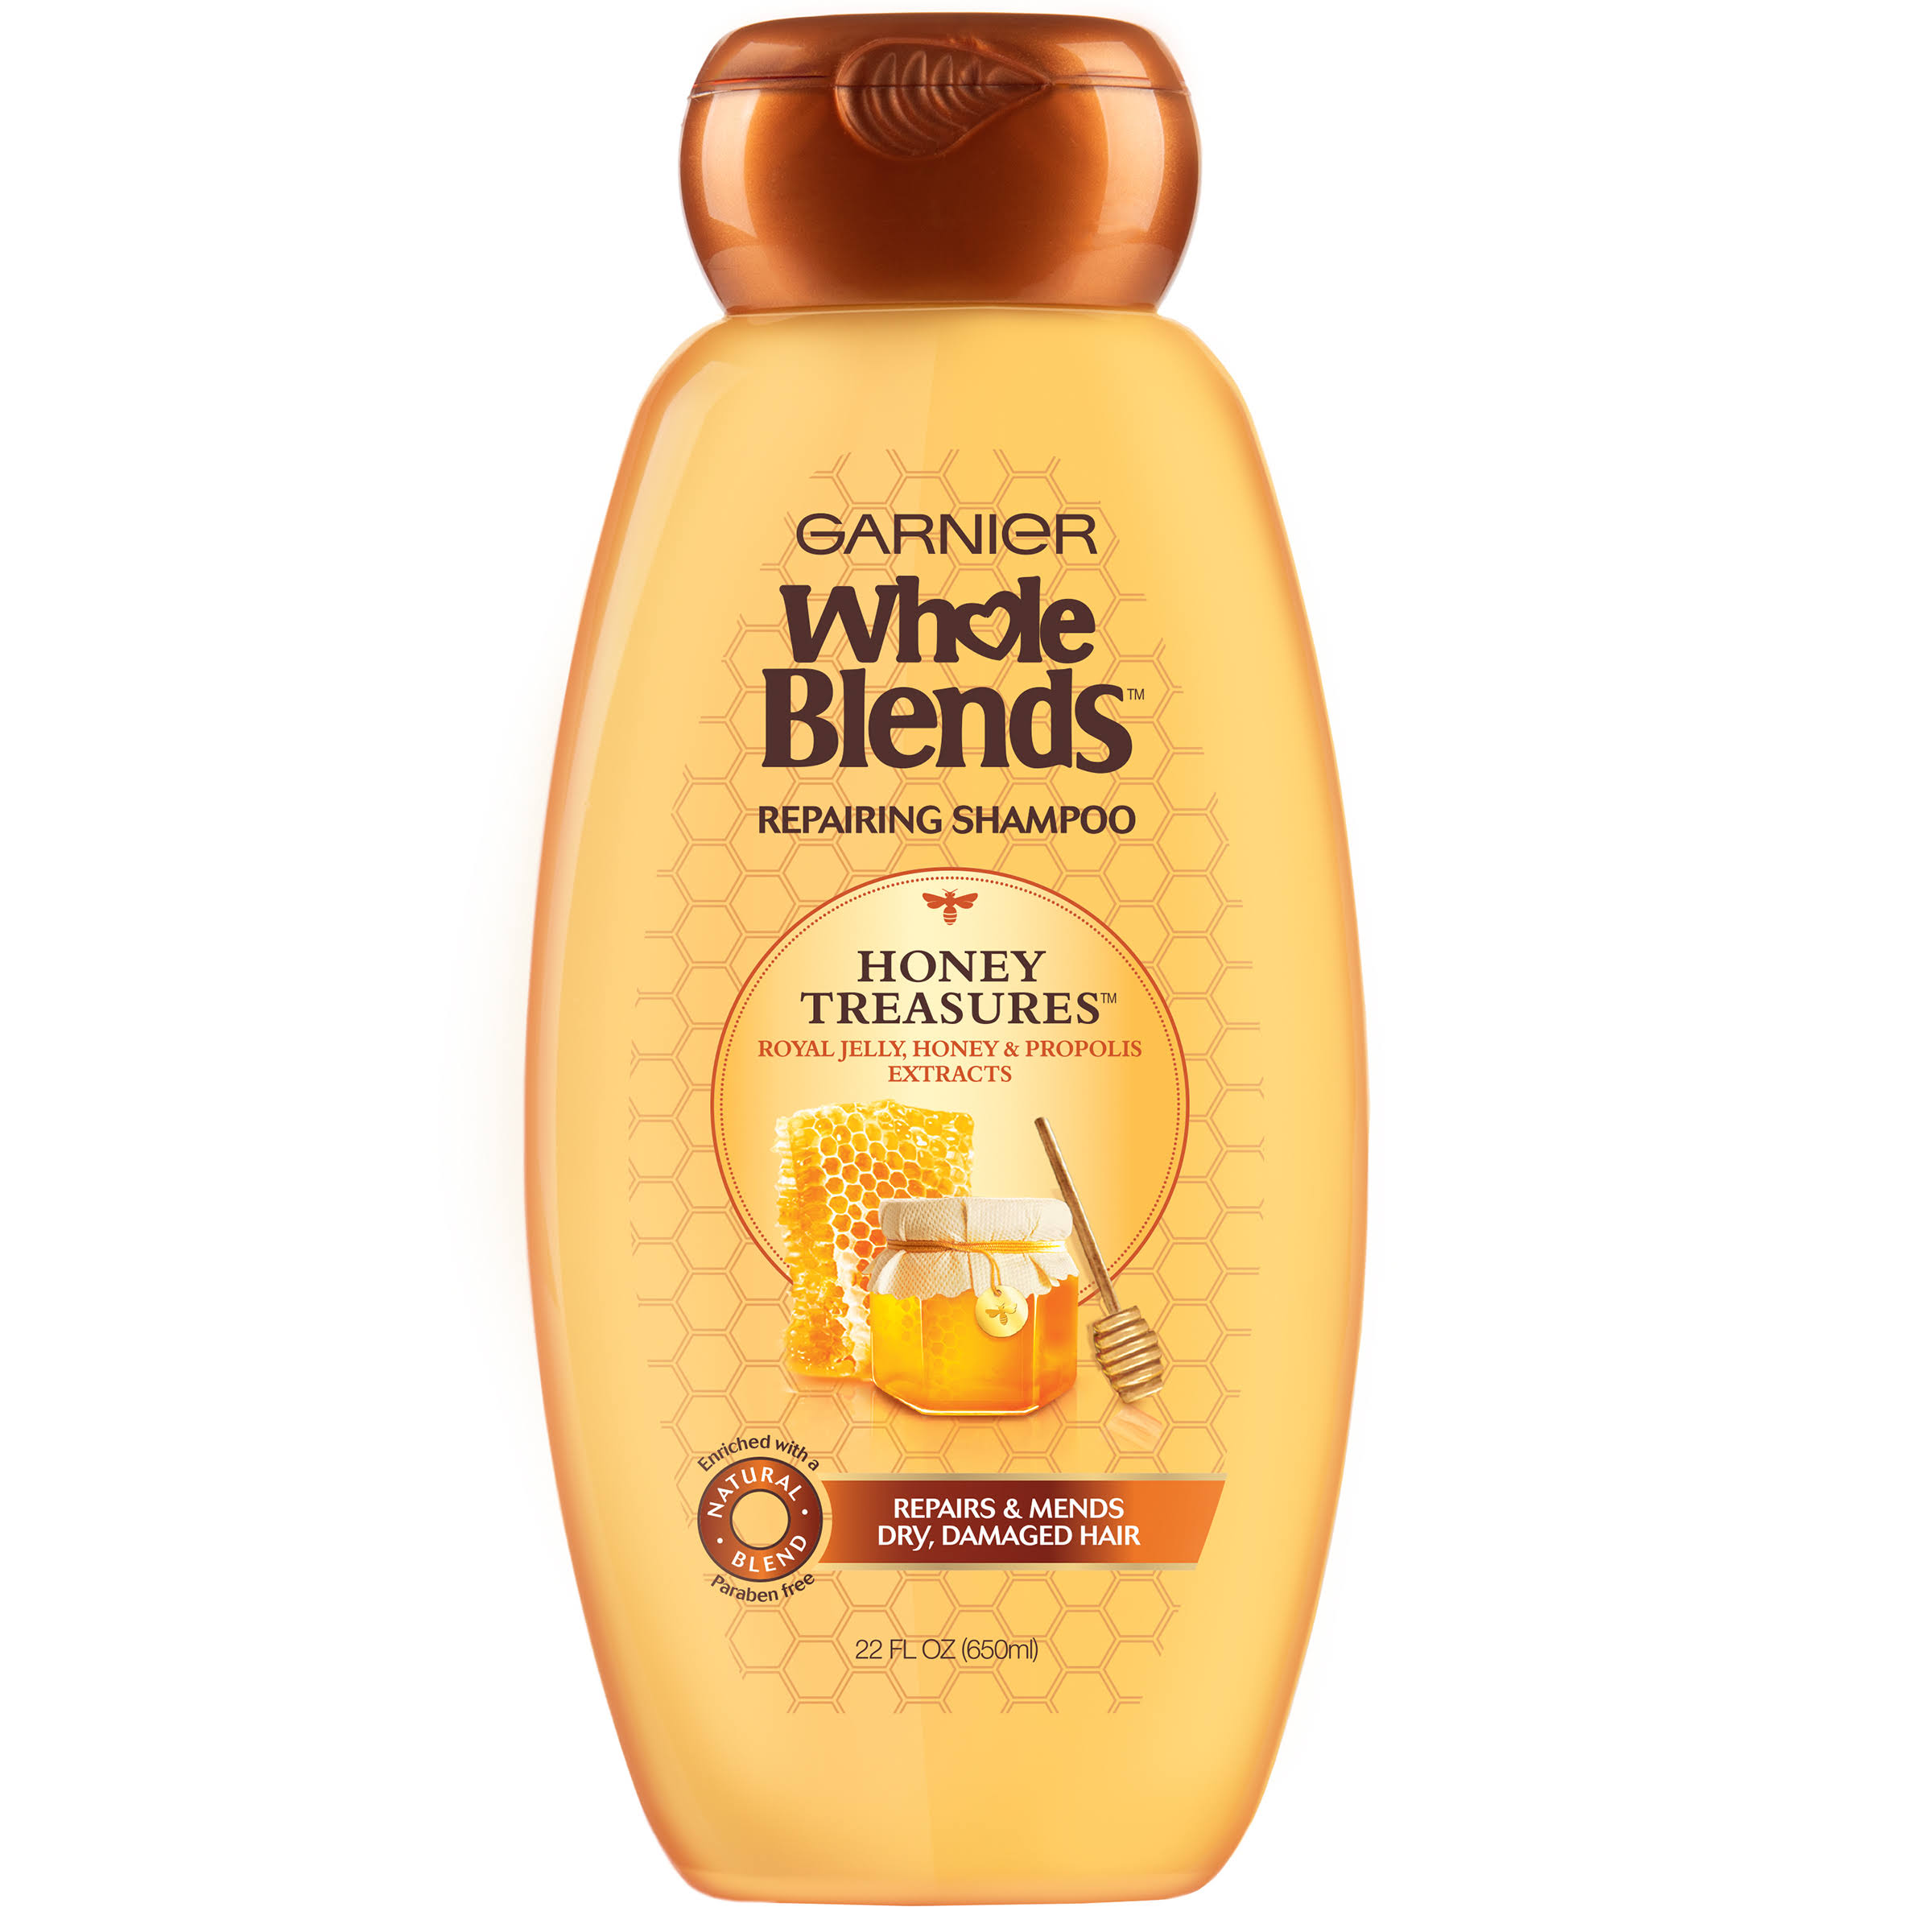 Garnier Whole Blends Repairing Shampoo - Honey Treasures, 22oz